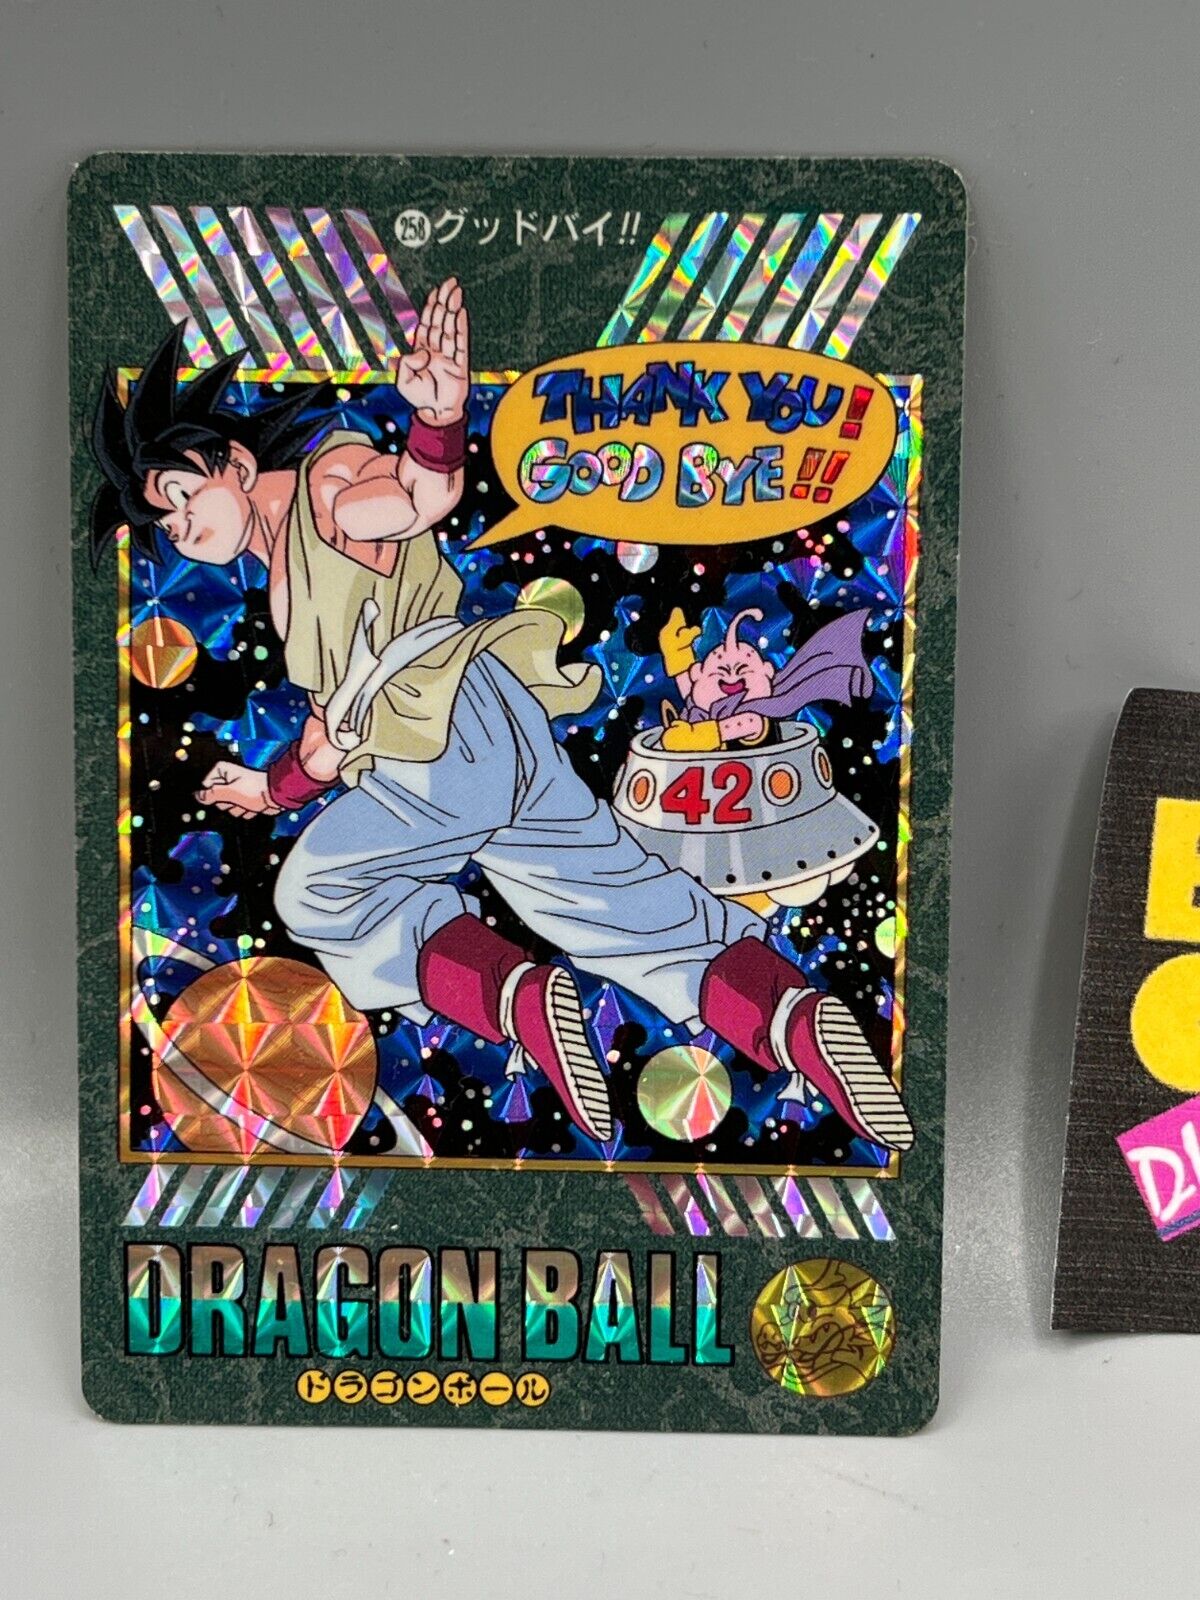 DRAGON BALL Z - Japanese Prism Card #258 - VISUAL ADVENTURE - Son Goku GOOD BYE